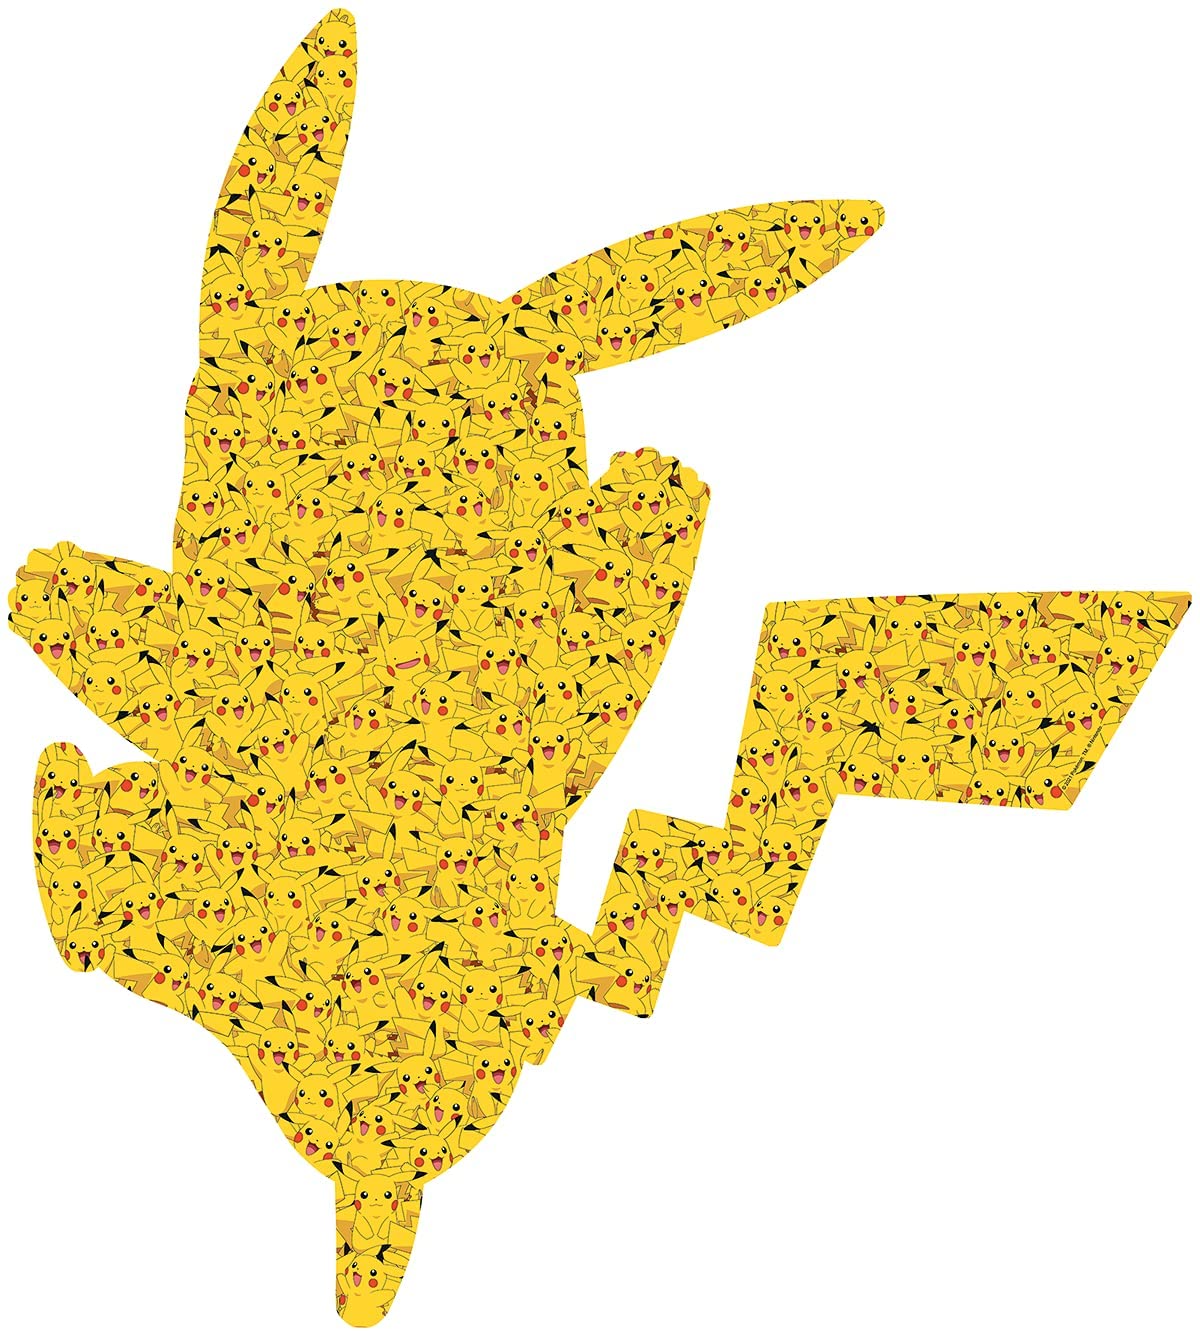 Online Jigsaw Puzzle «Pikachu»